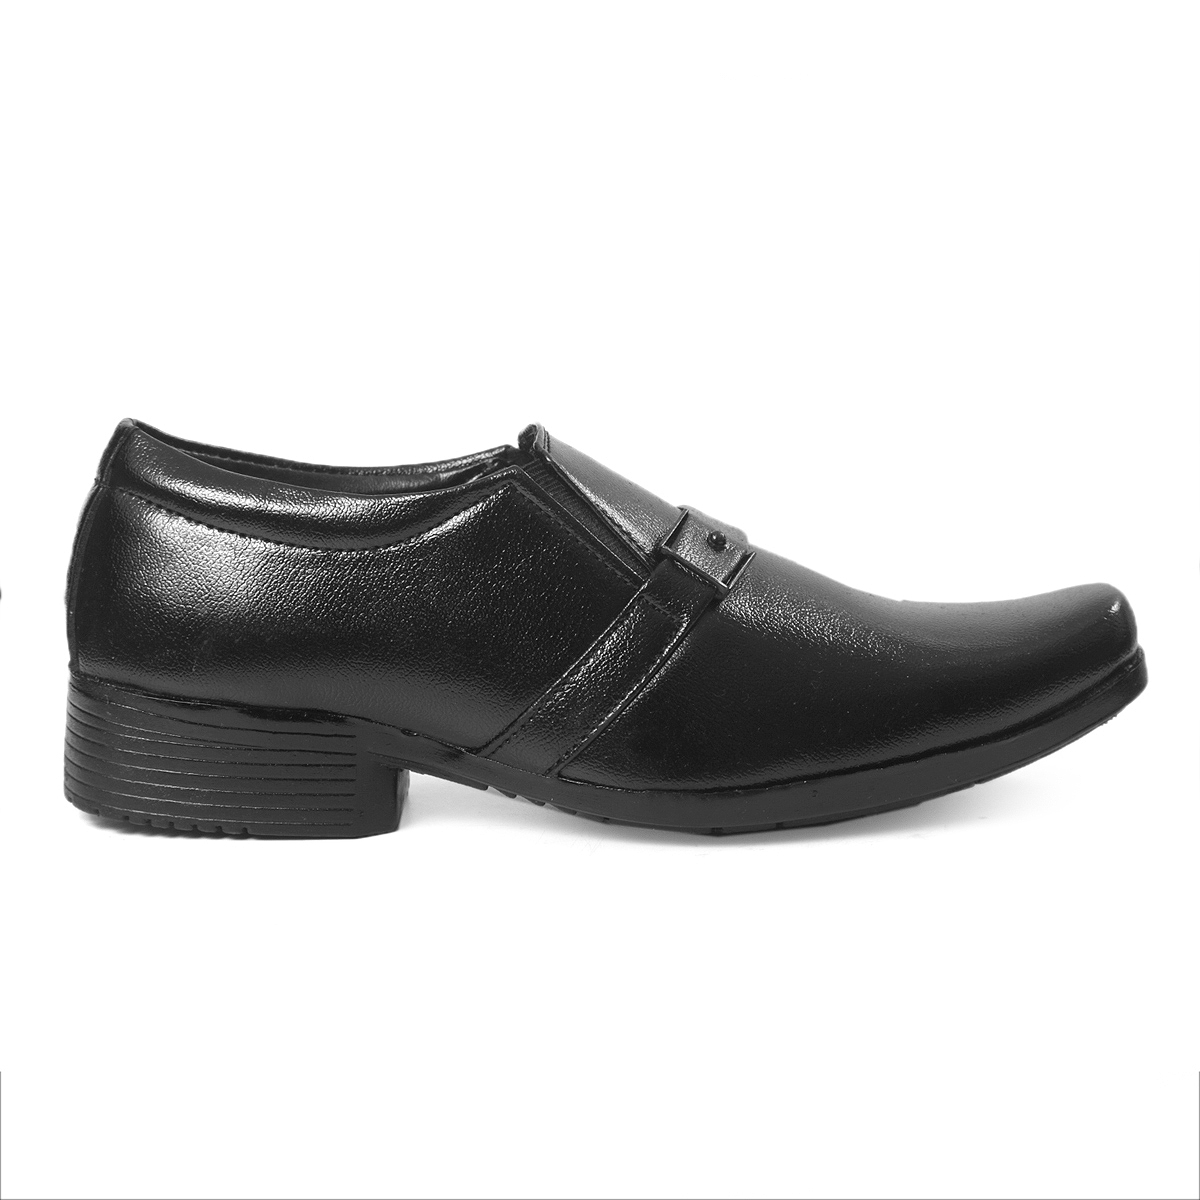 Buy Global Rich Men's Black Formal shoe Online @ ₹589 from ShopClues